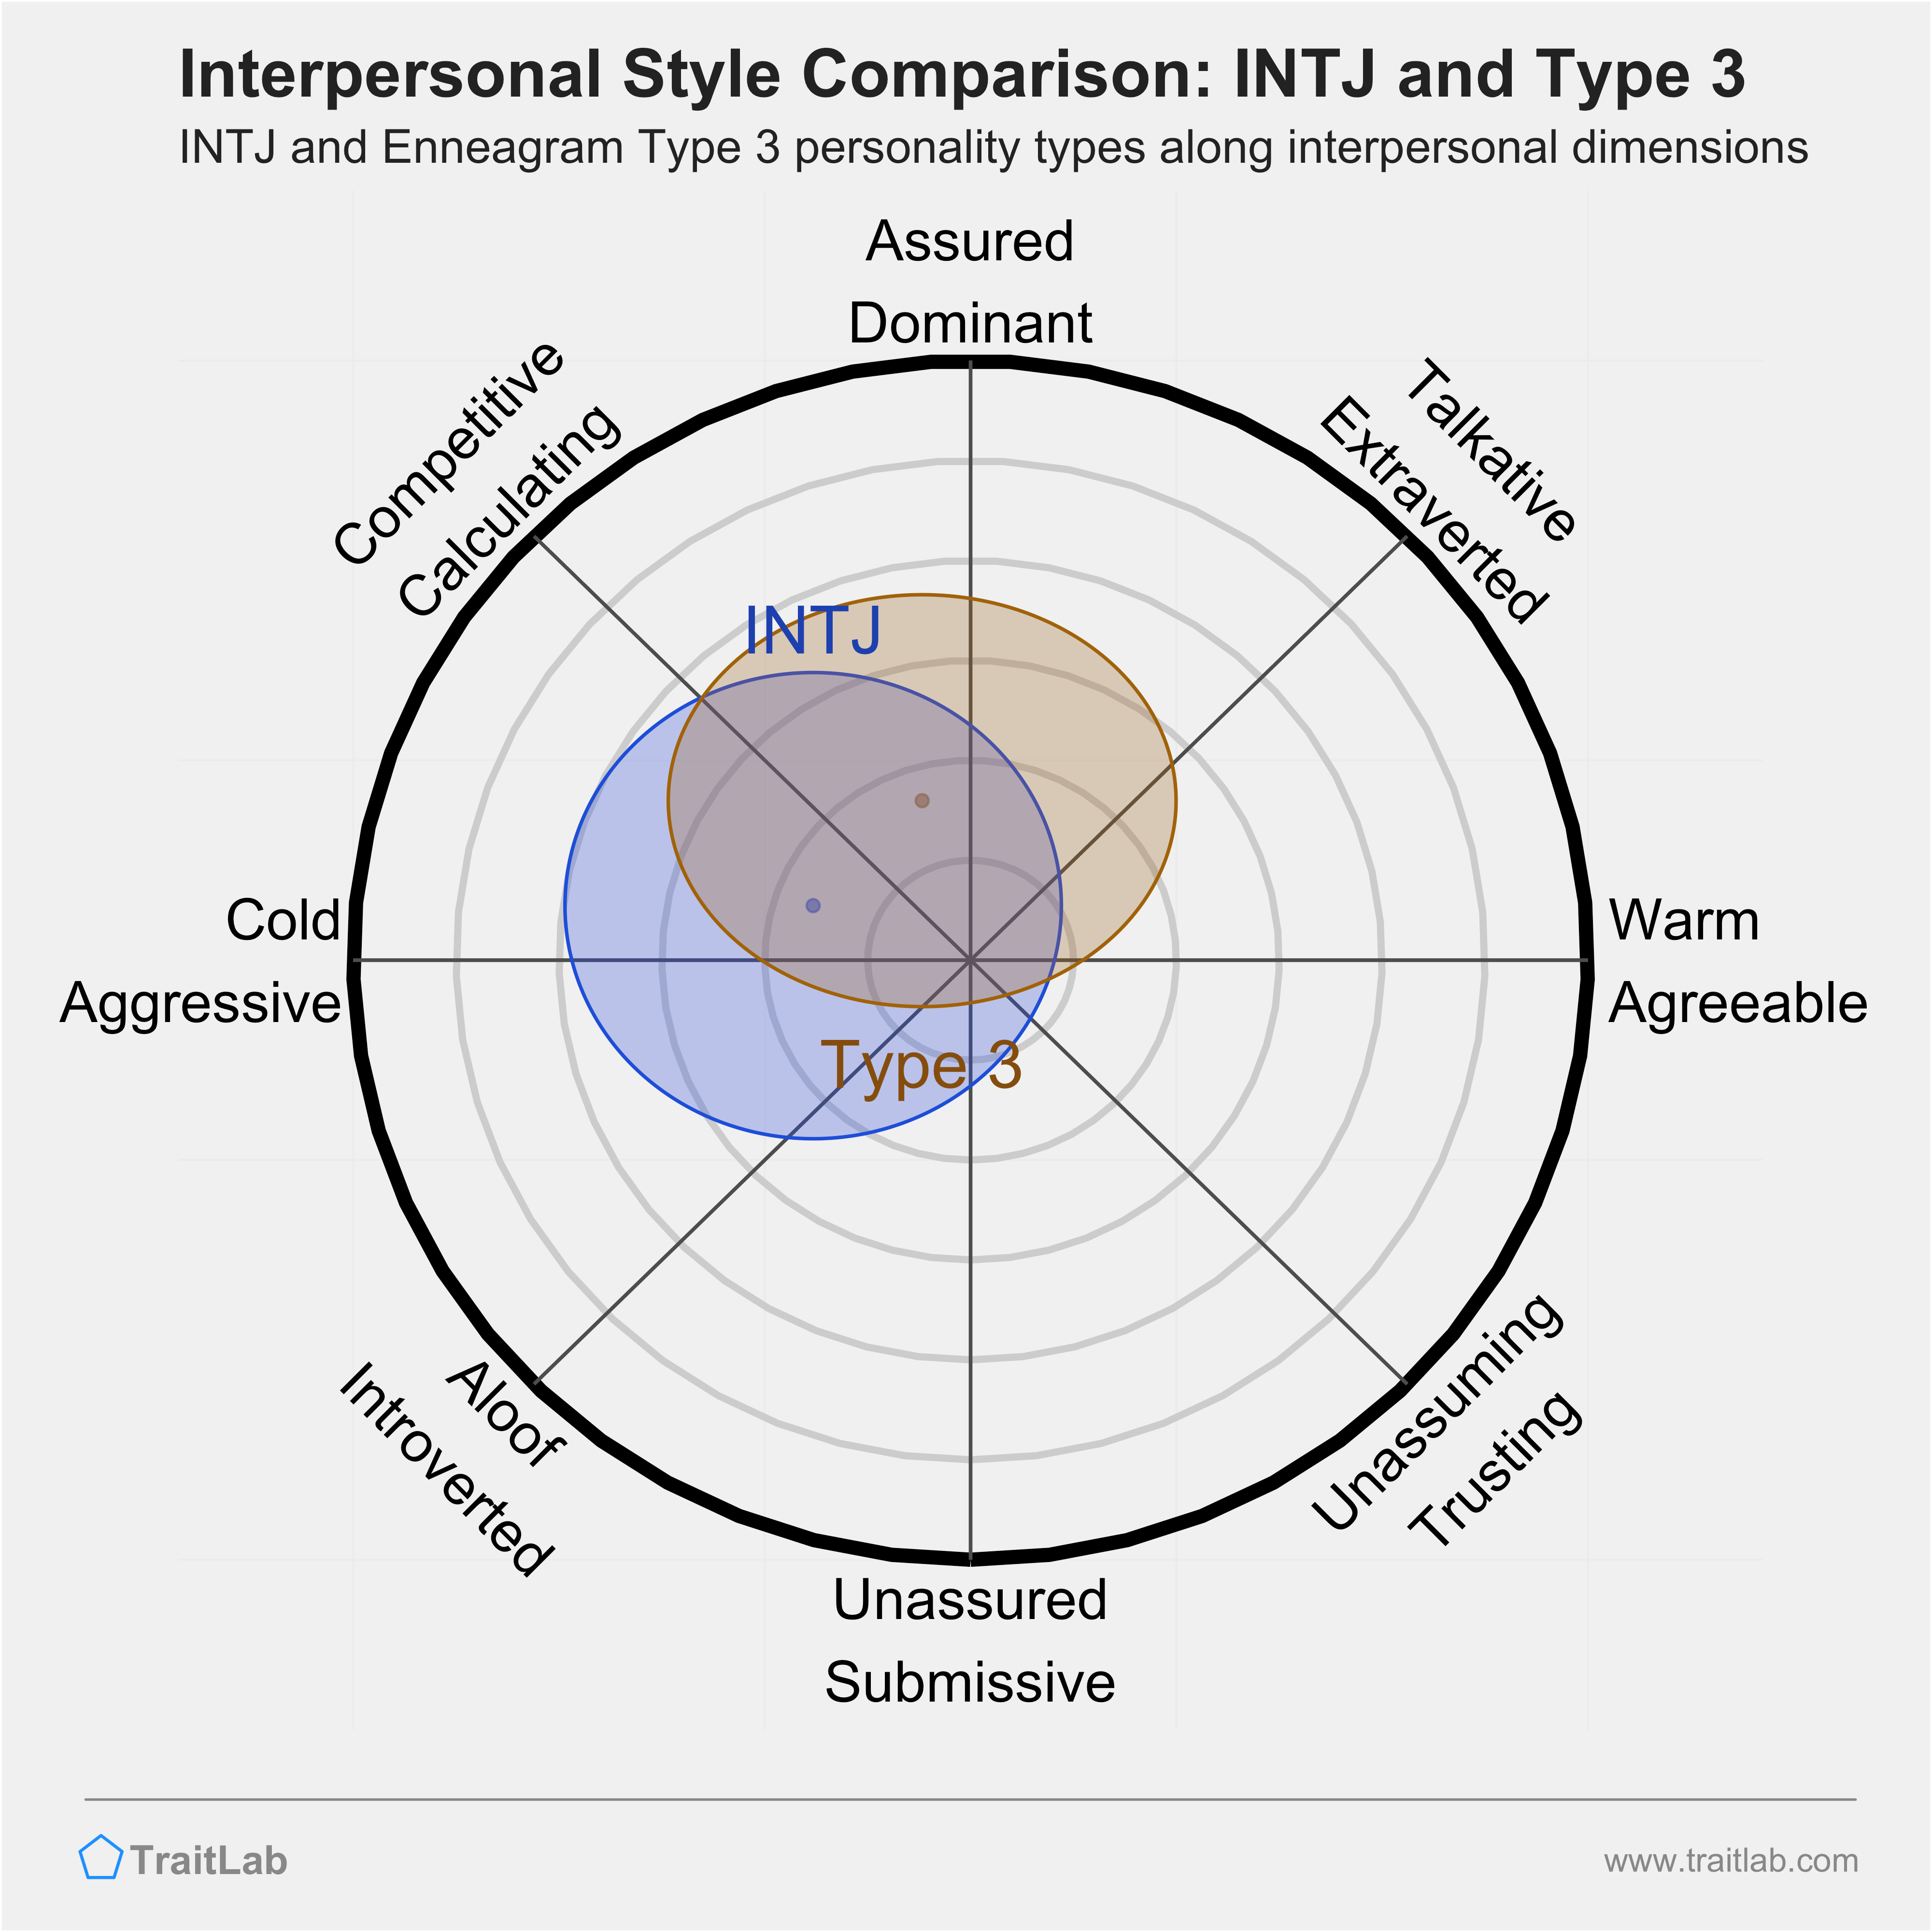 Enneagram INTJ and Type 3 comparison across interpersonal dimensions